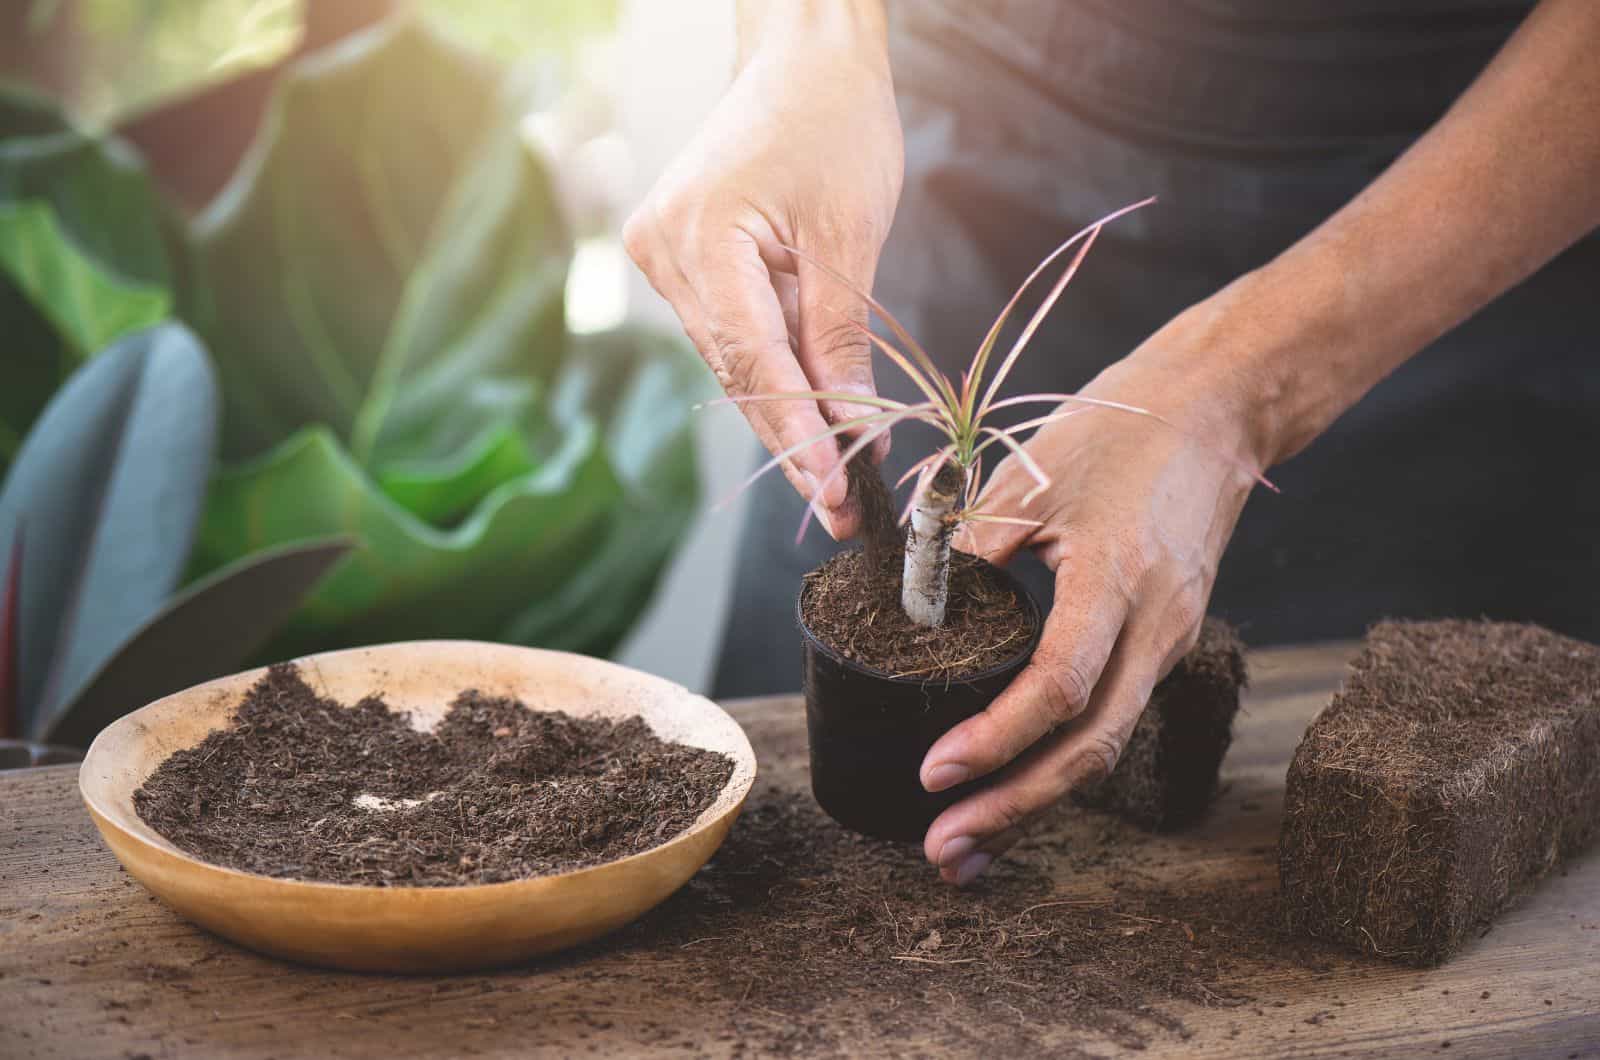 hands adding soil to plant pot